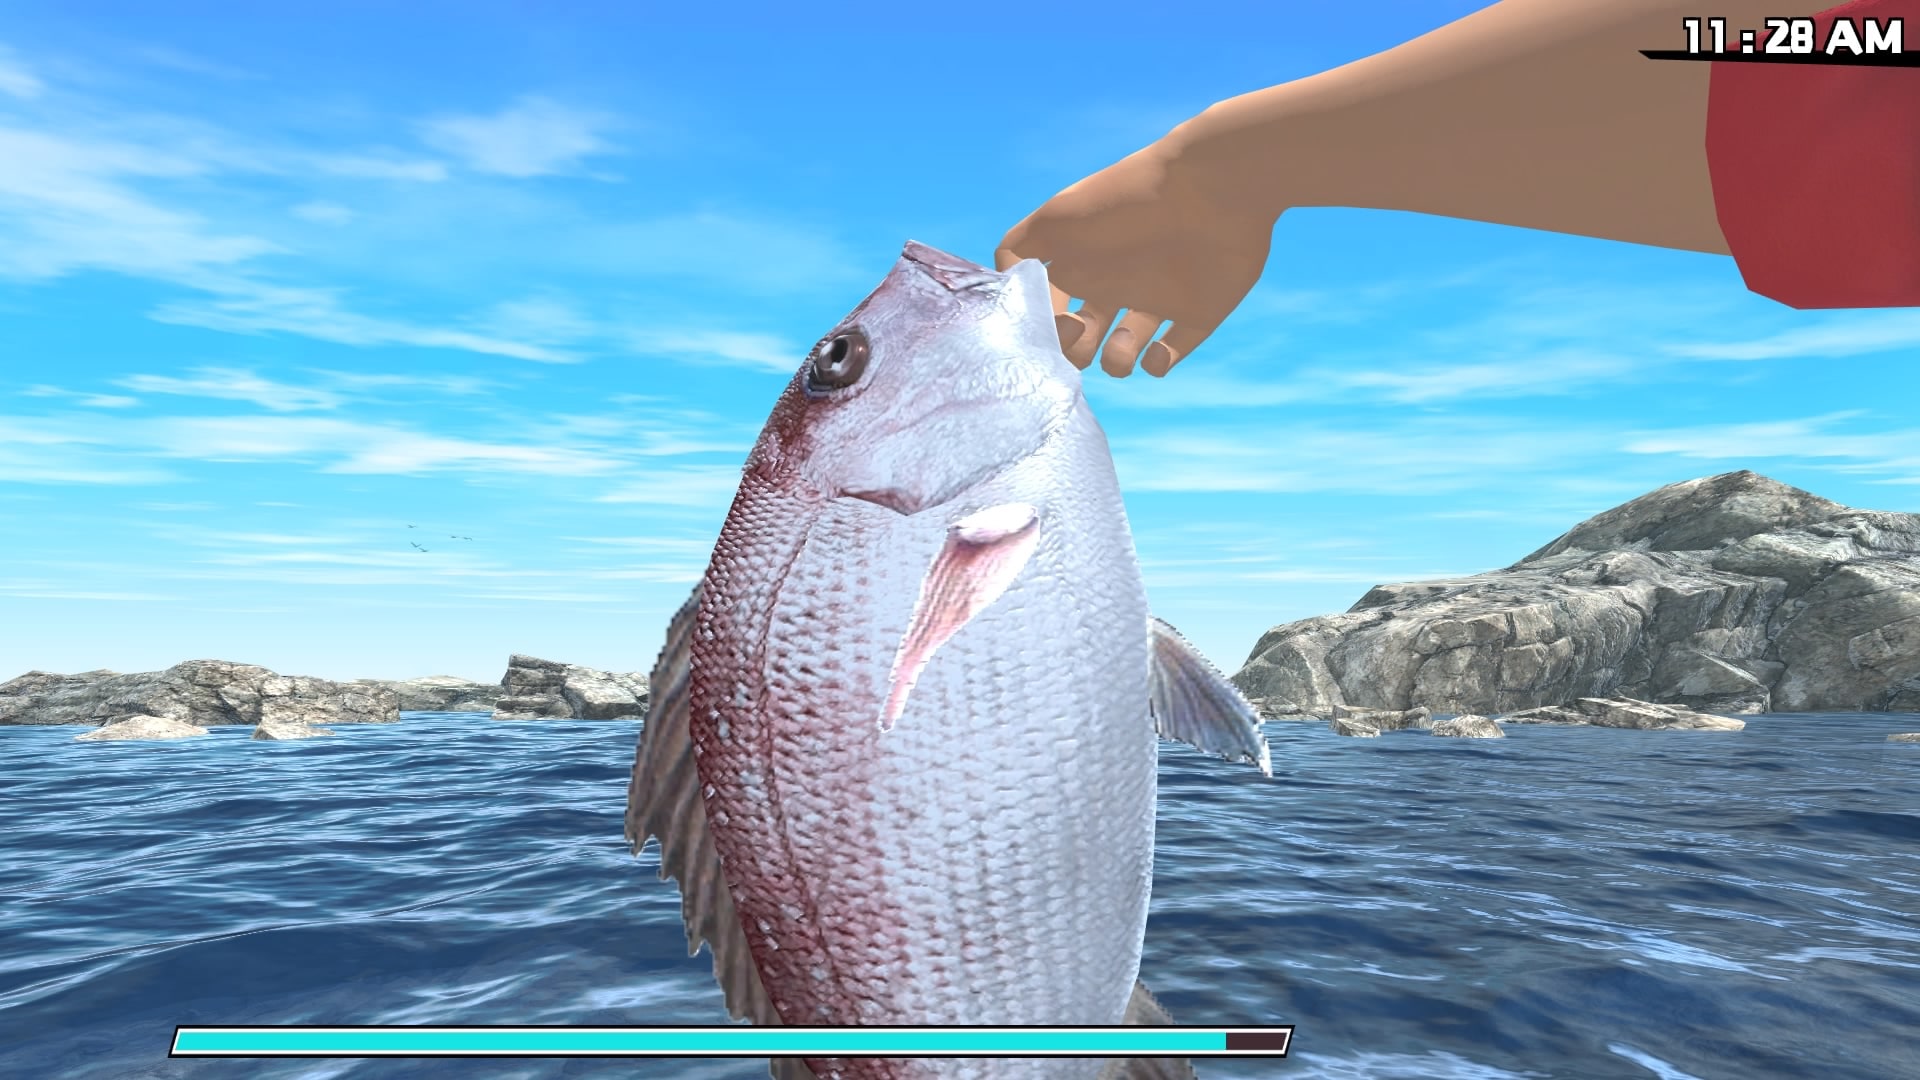 Reel Fishing: Road Trip Adventure - PlayStation 4, Natsume